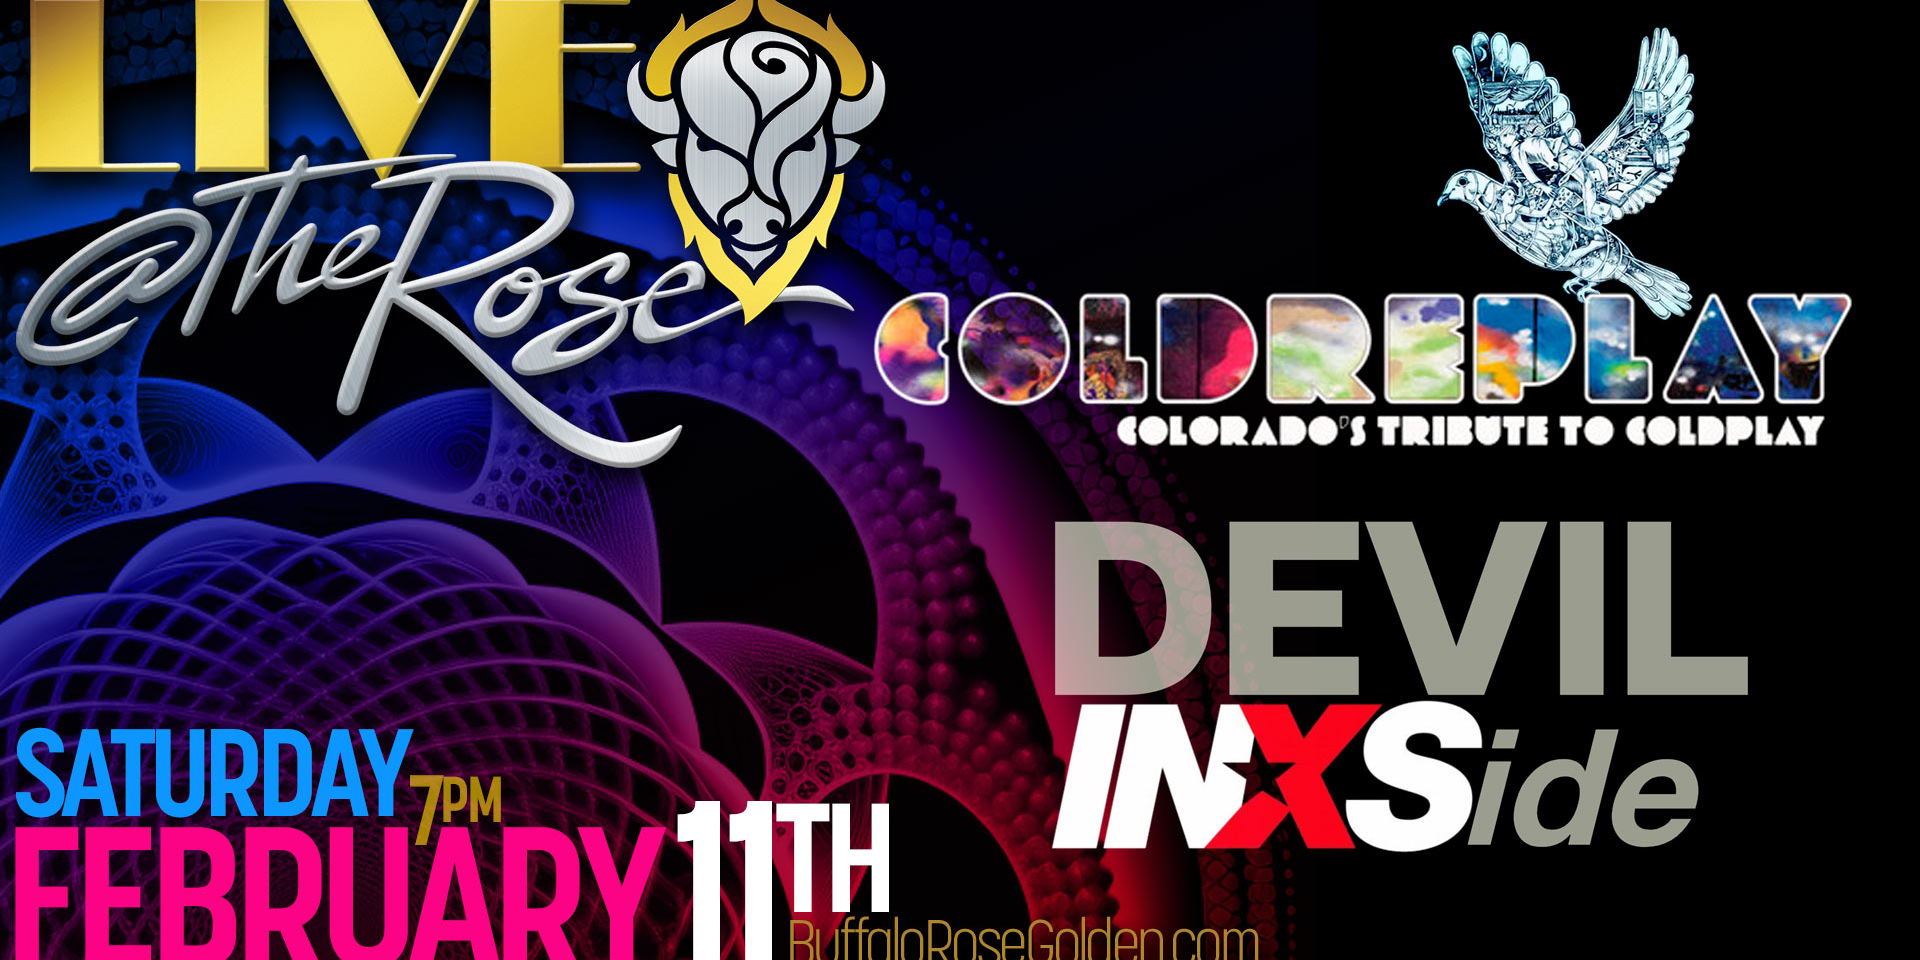 Live @ The Rose - ColdReplay & Devil INXSide promotional image